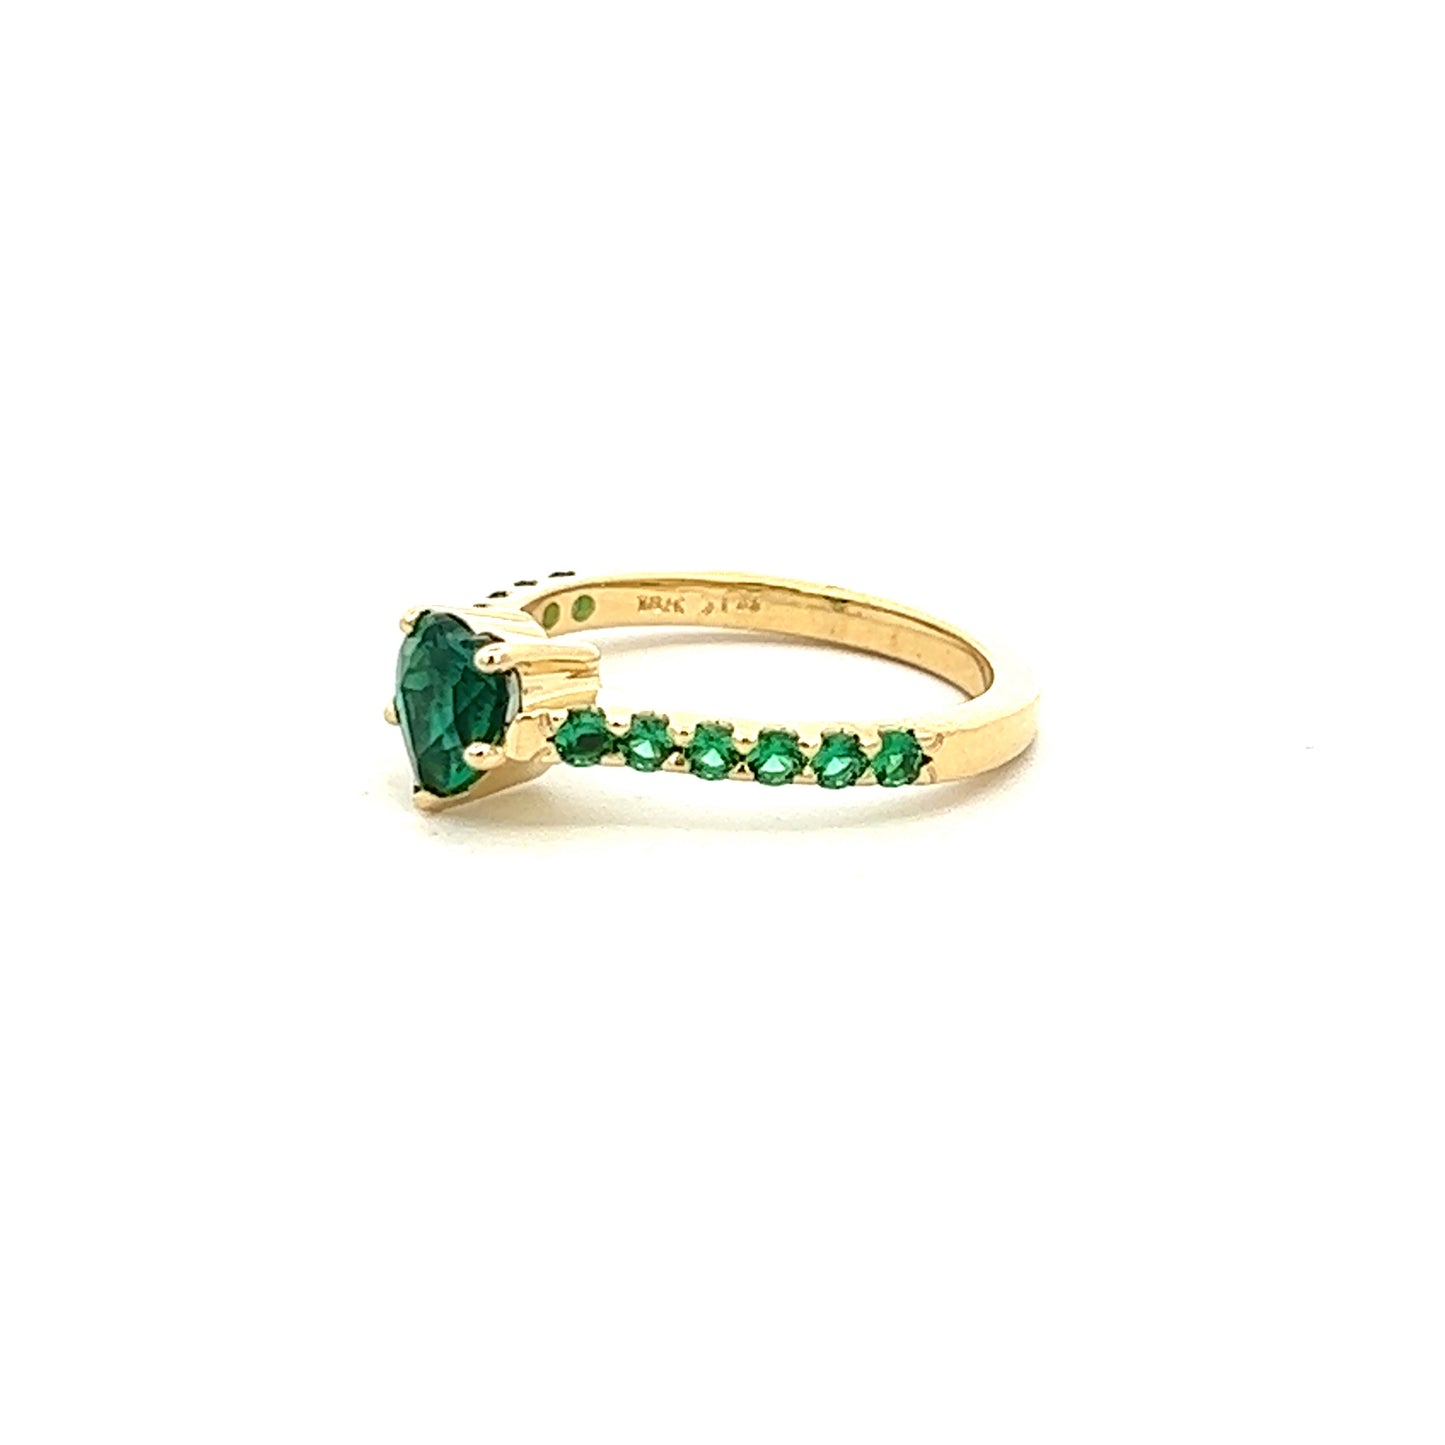 Tim Nelson Designs 14K Emerald Heart Ring